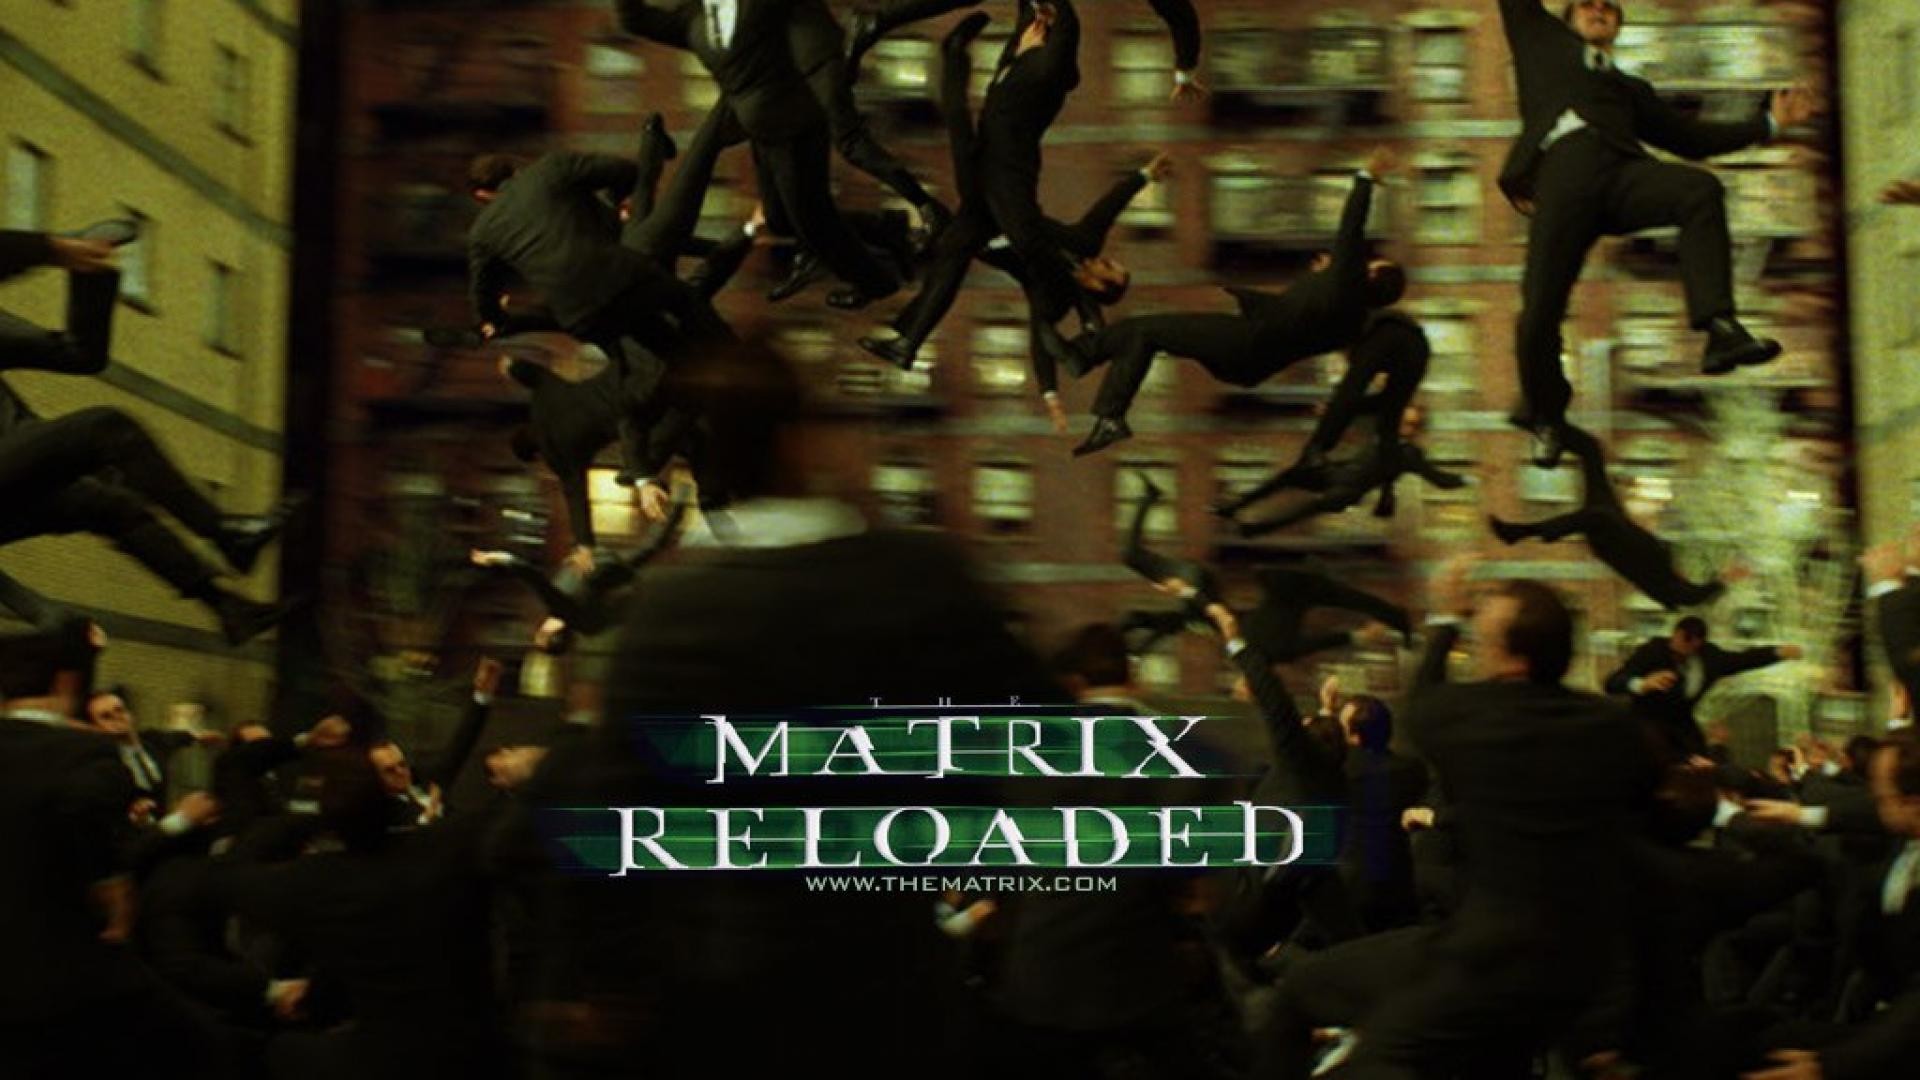 1920x1080 The Matrix Reloaded Wallpaper HD 11 - 1920 X 1080